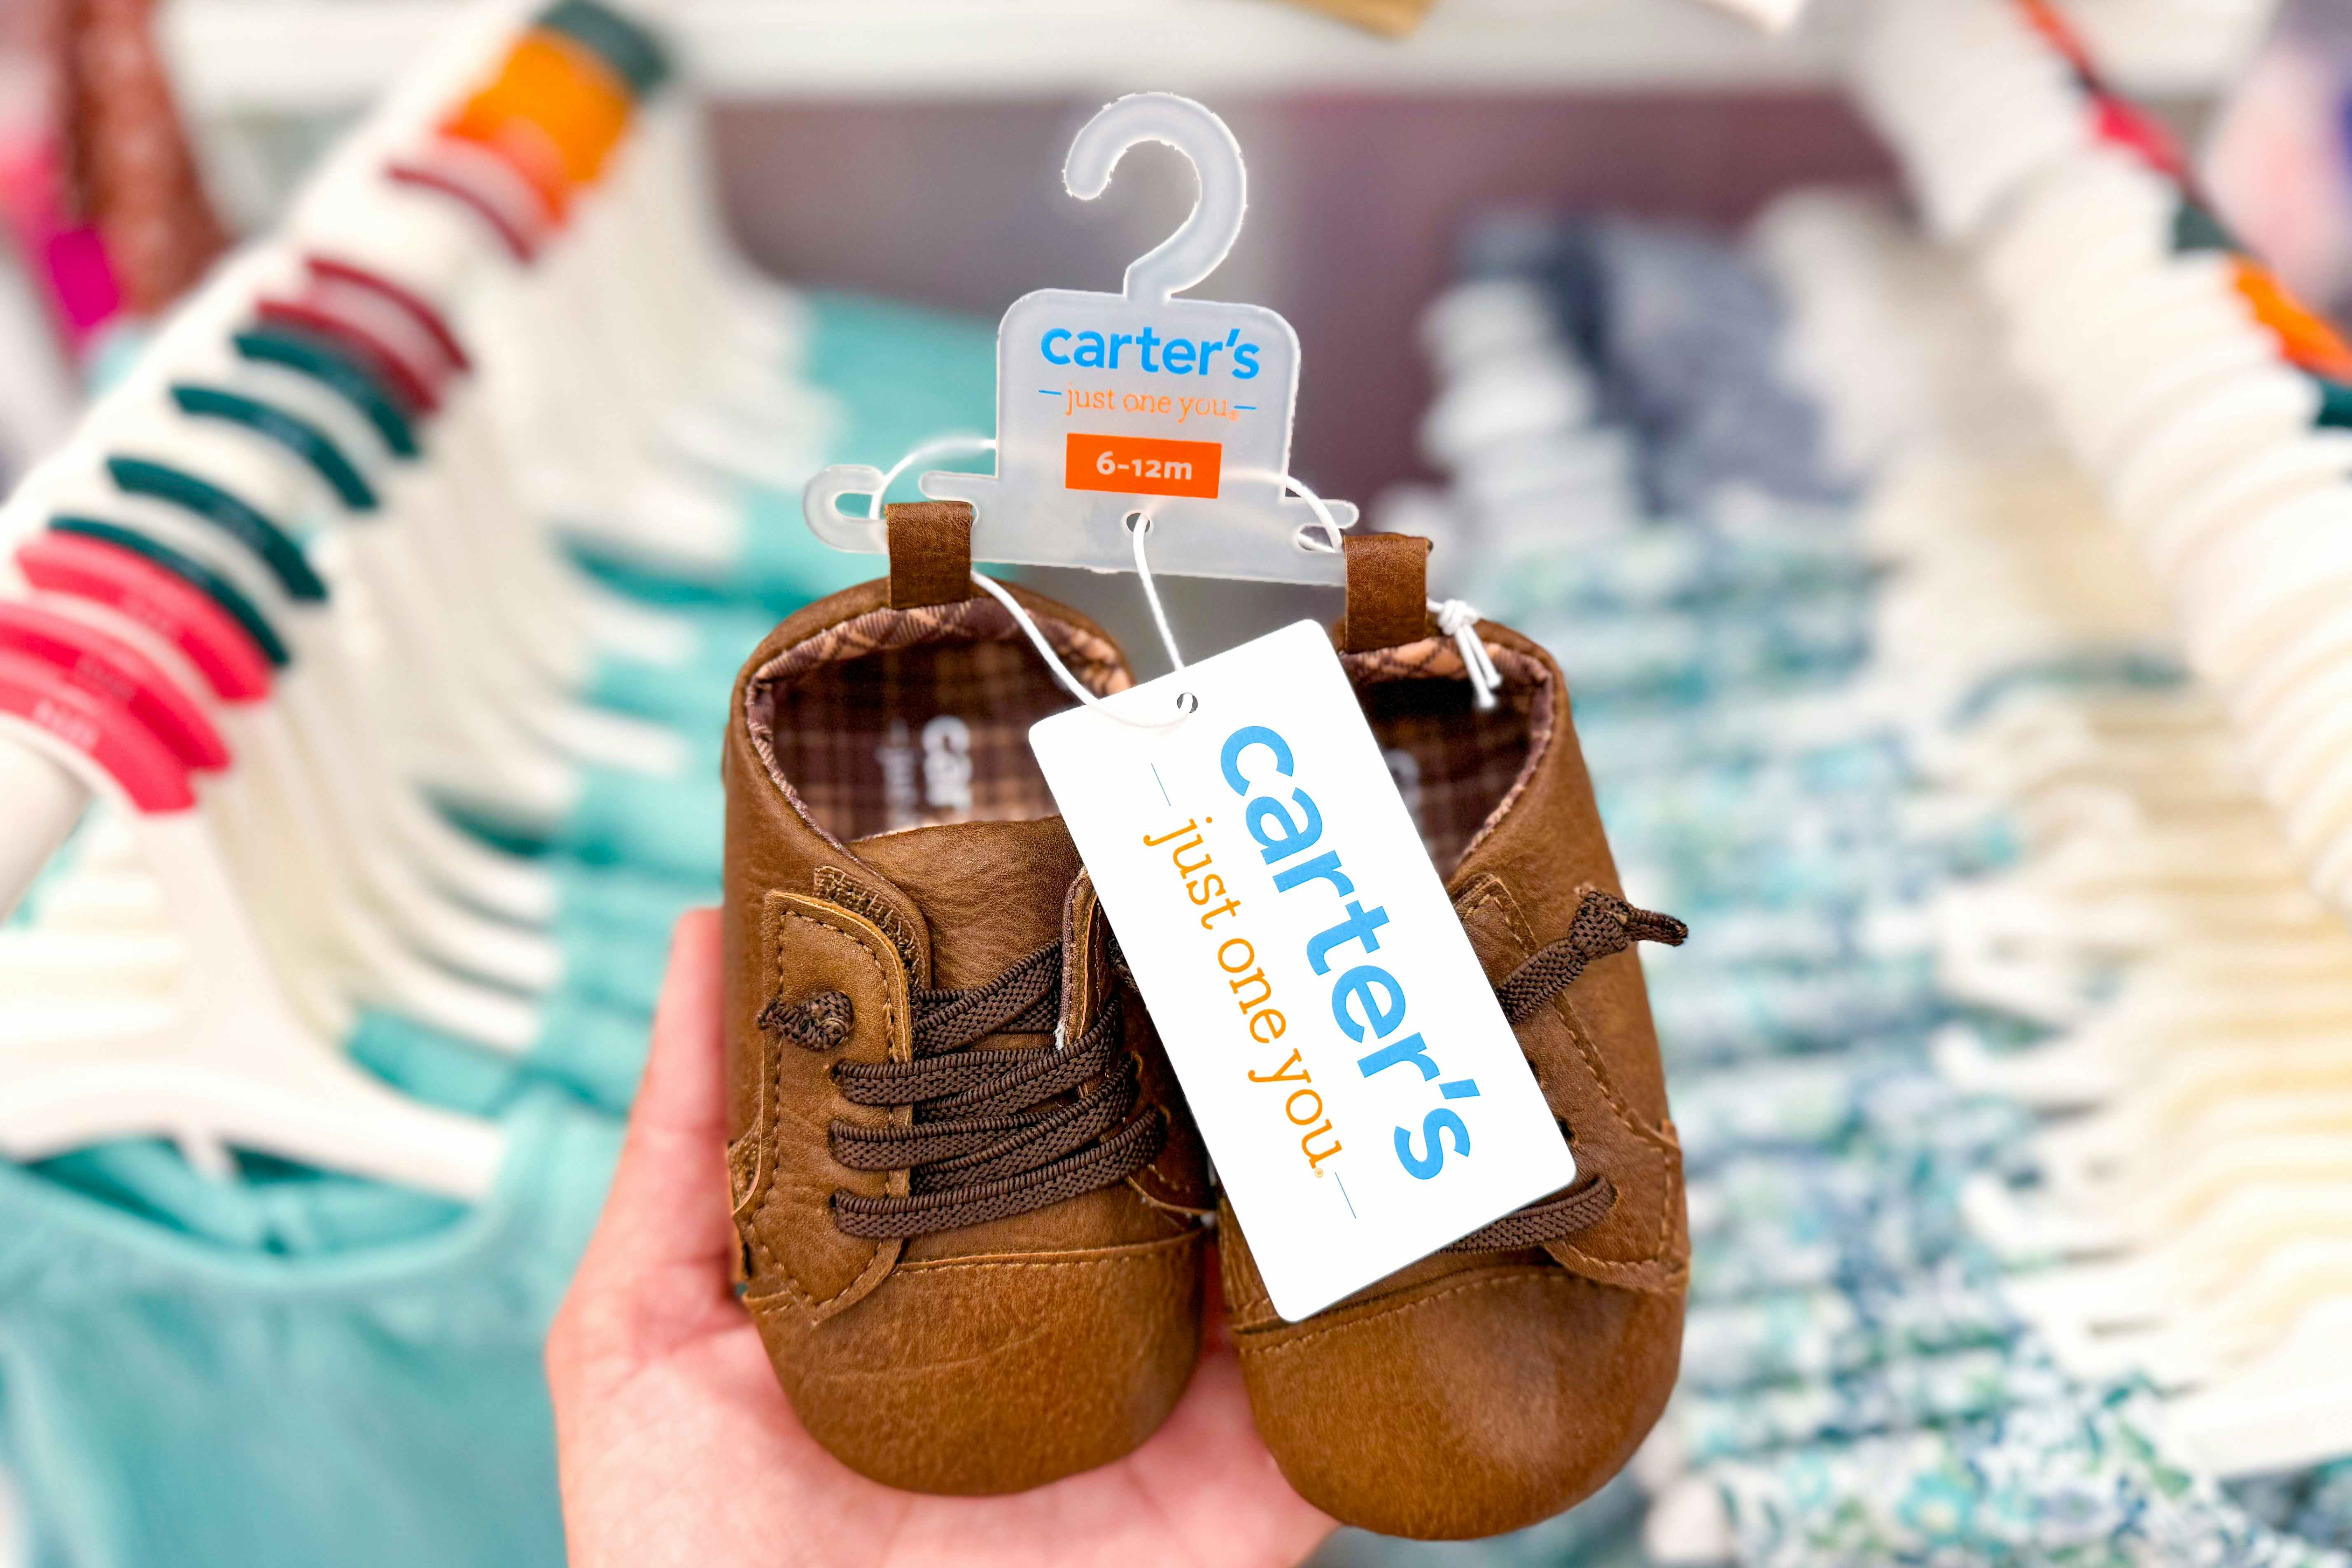 Carter's Baby Sneakers, Just $9.49 at Target (Reg. $18)